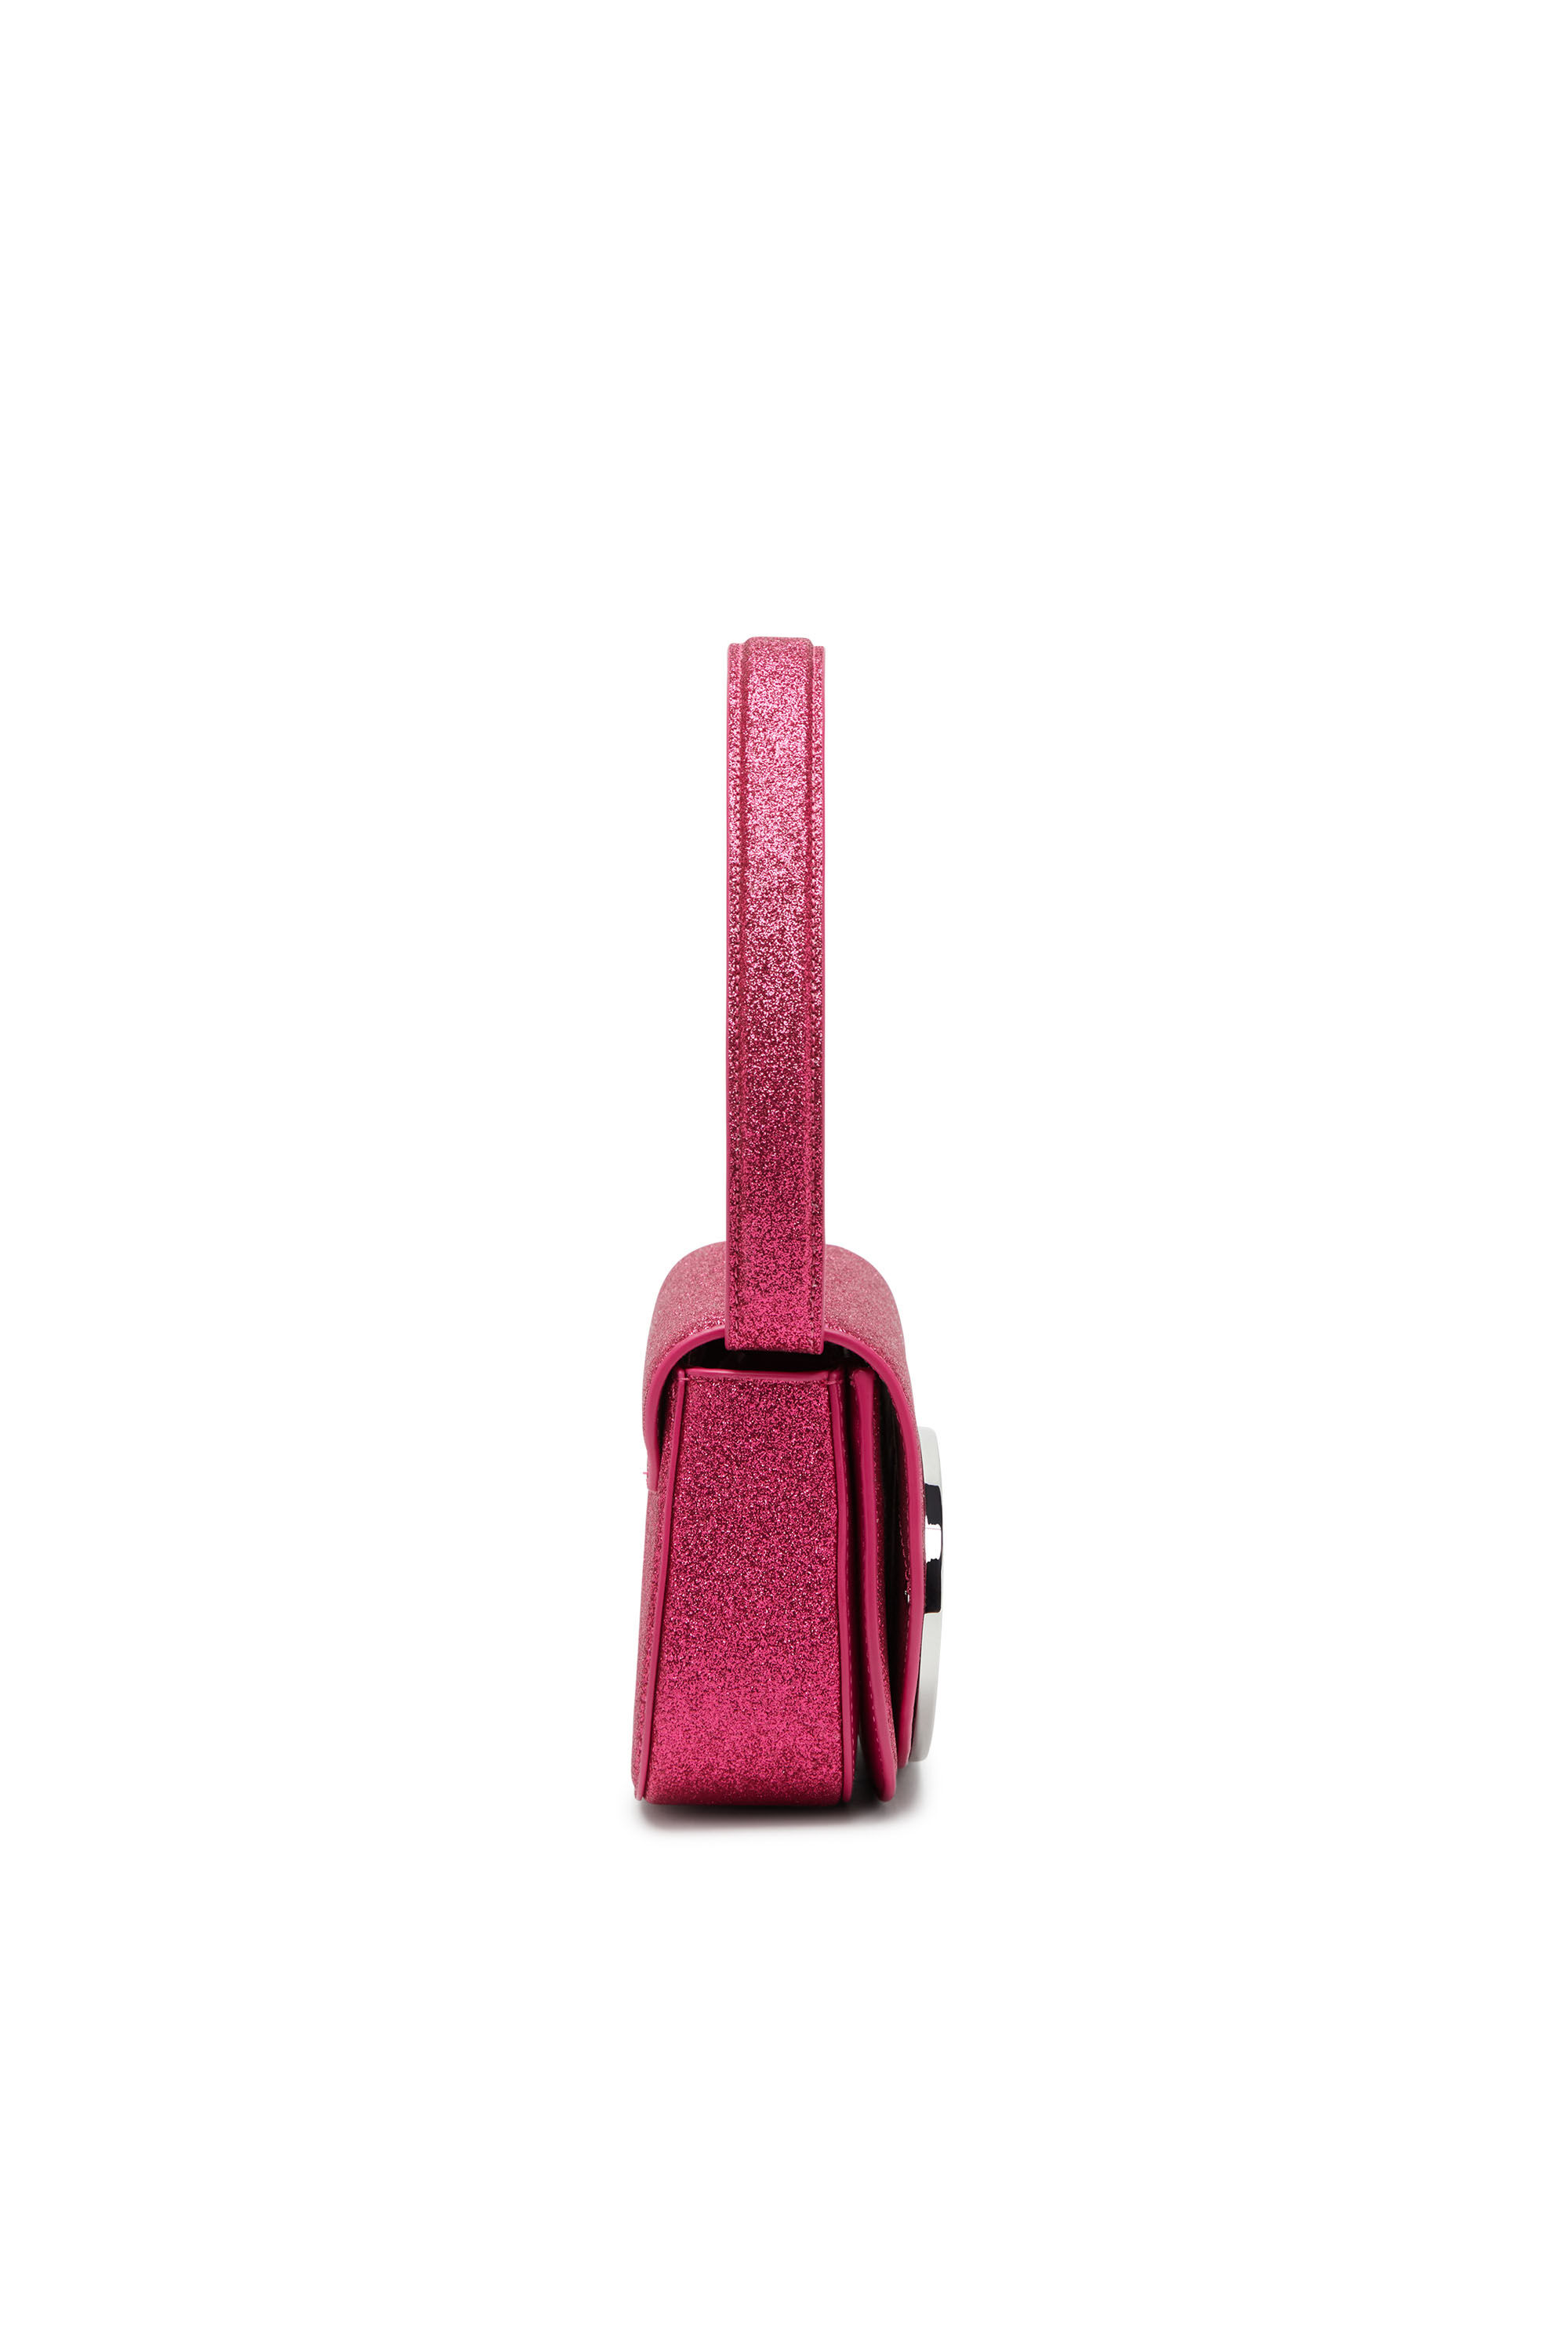 Diesel - 1DR, Female 1DR-Iconic shoulder bag in glitter fabric in Pink - Image 4